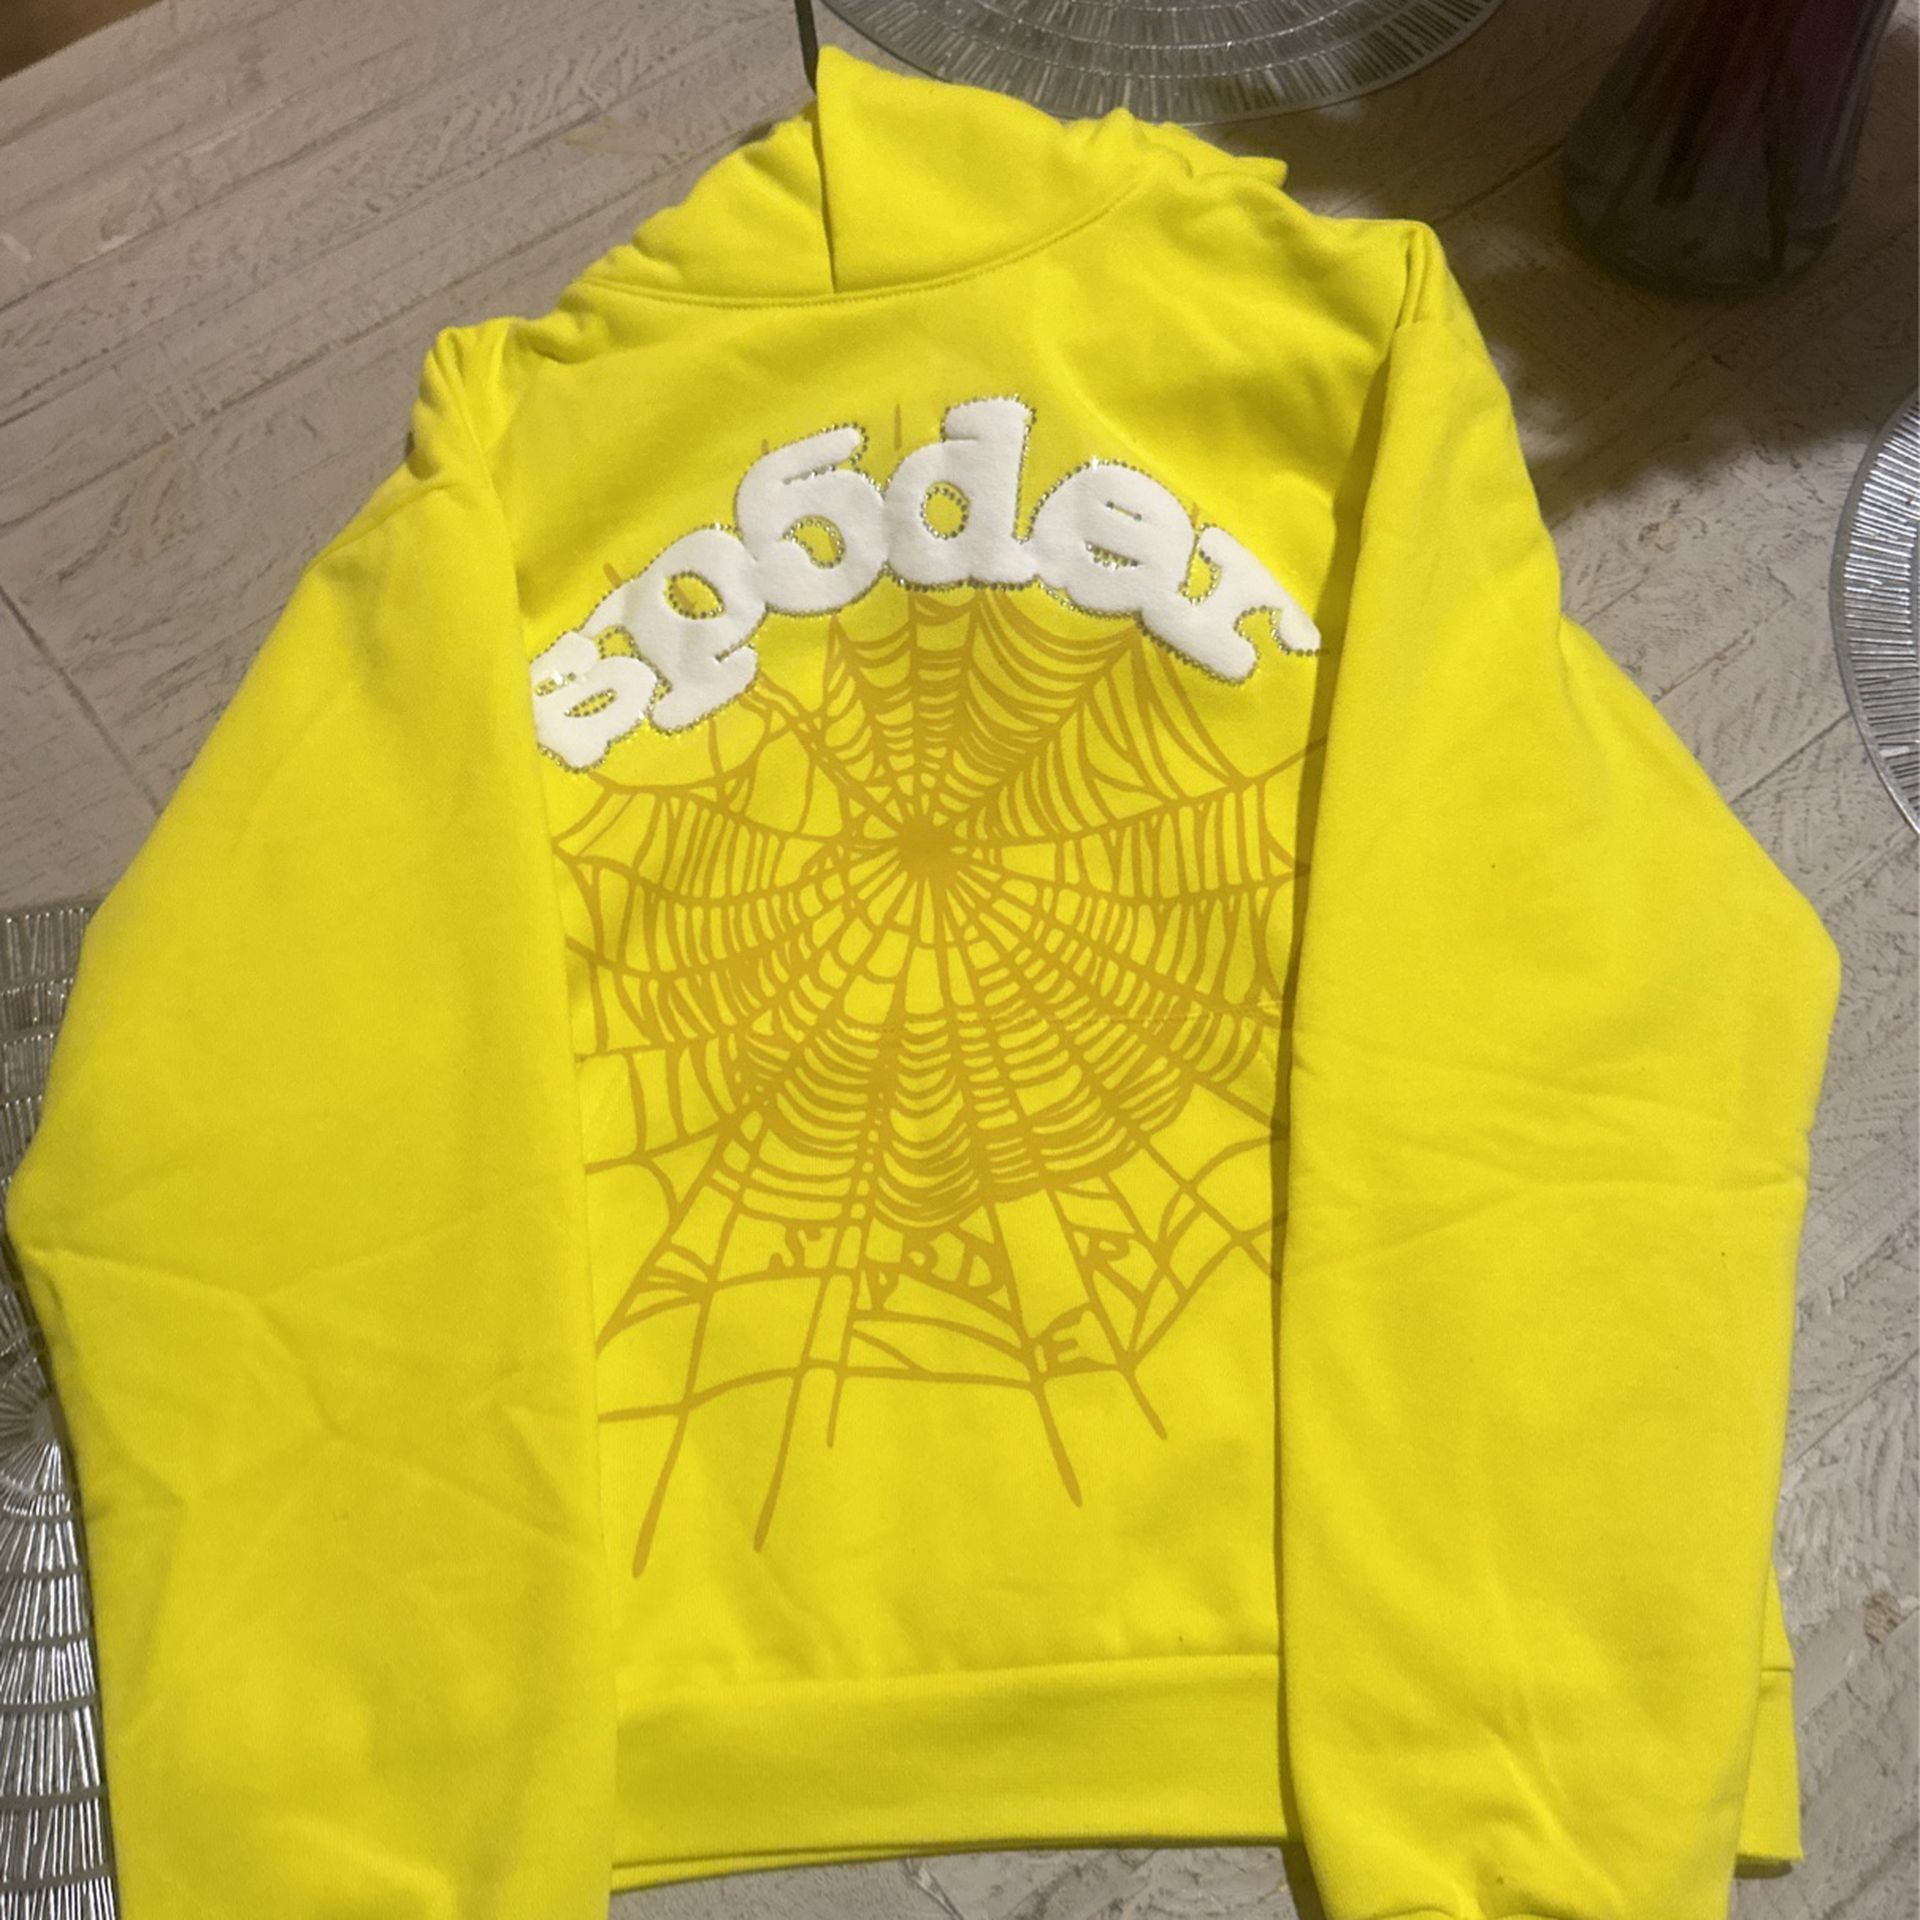 yellow sp5der hoodie